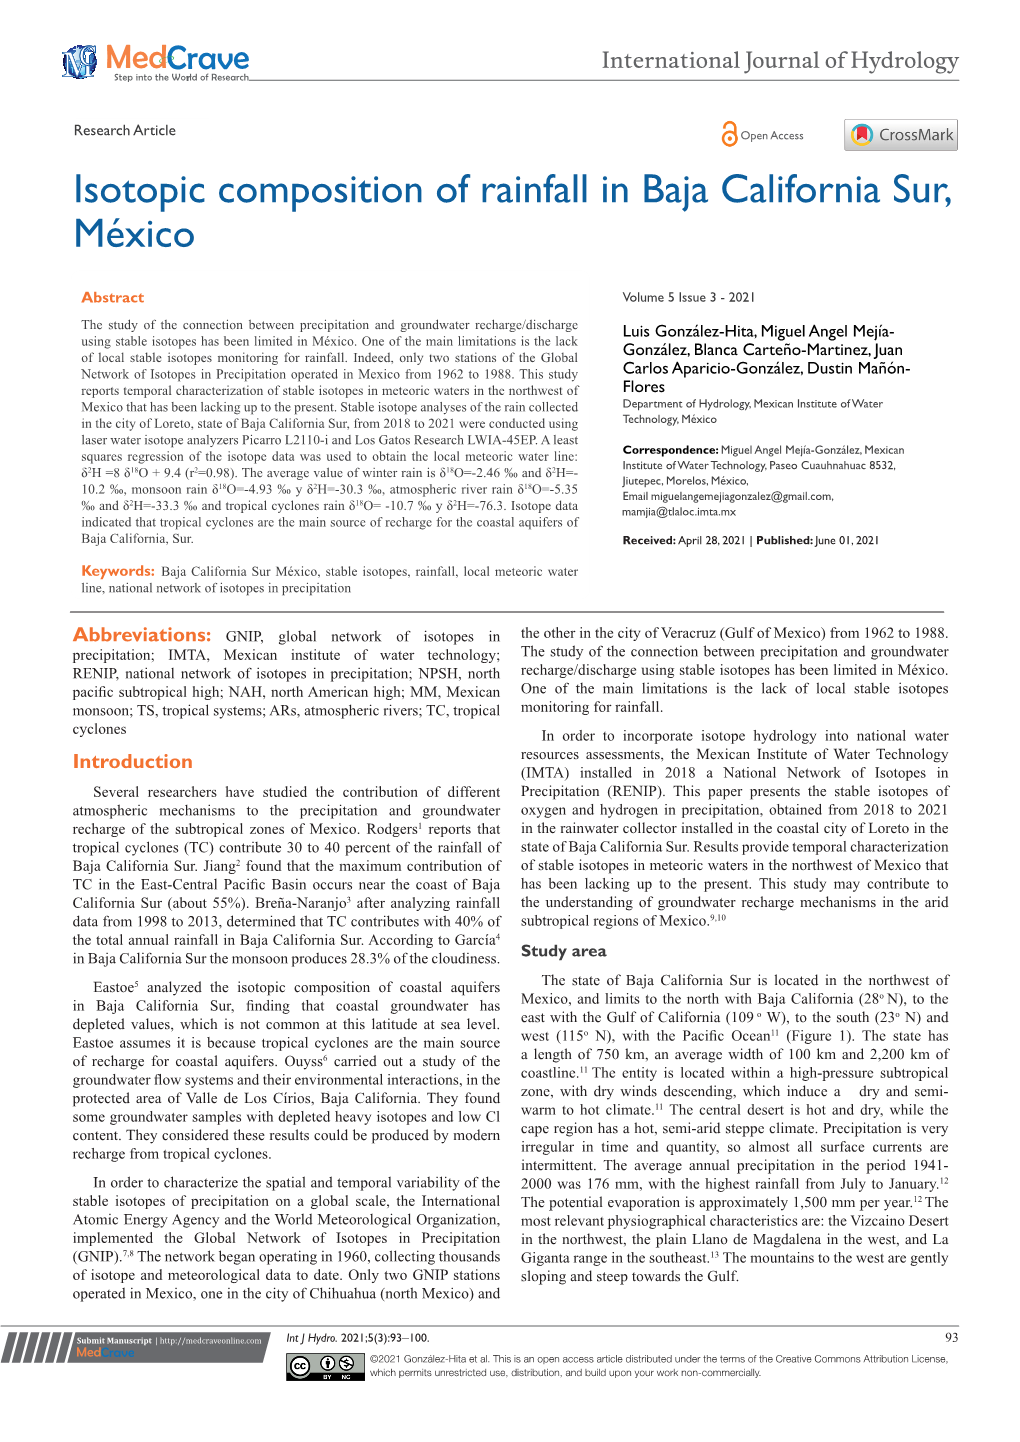 Isotopic Composition of Rainfall in Baja California Sur, México